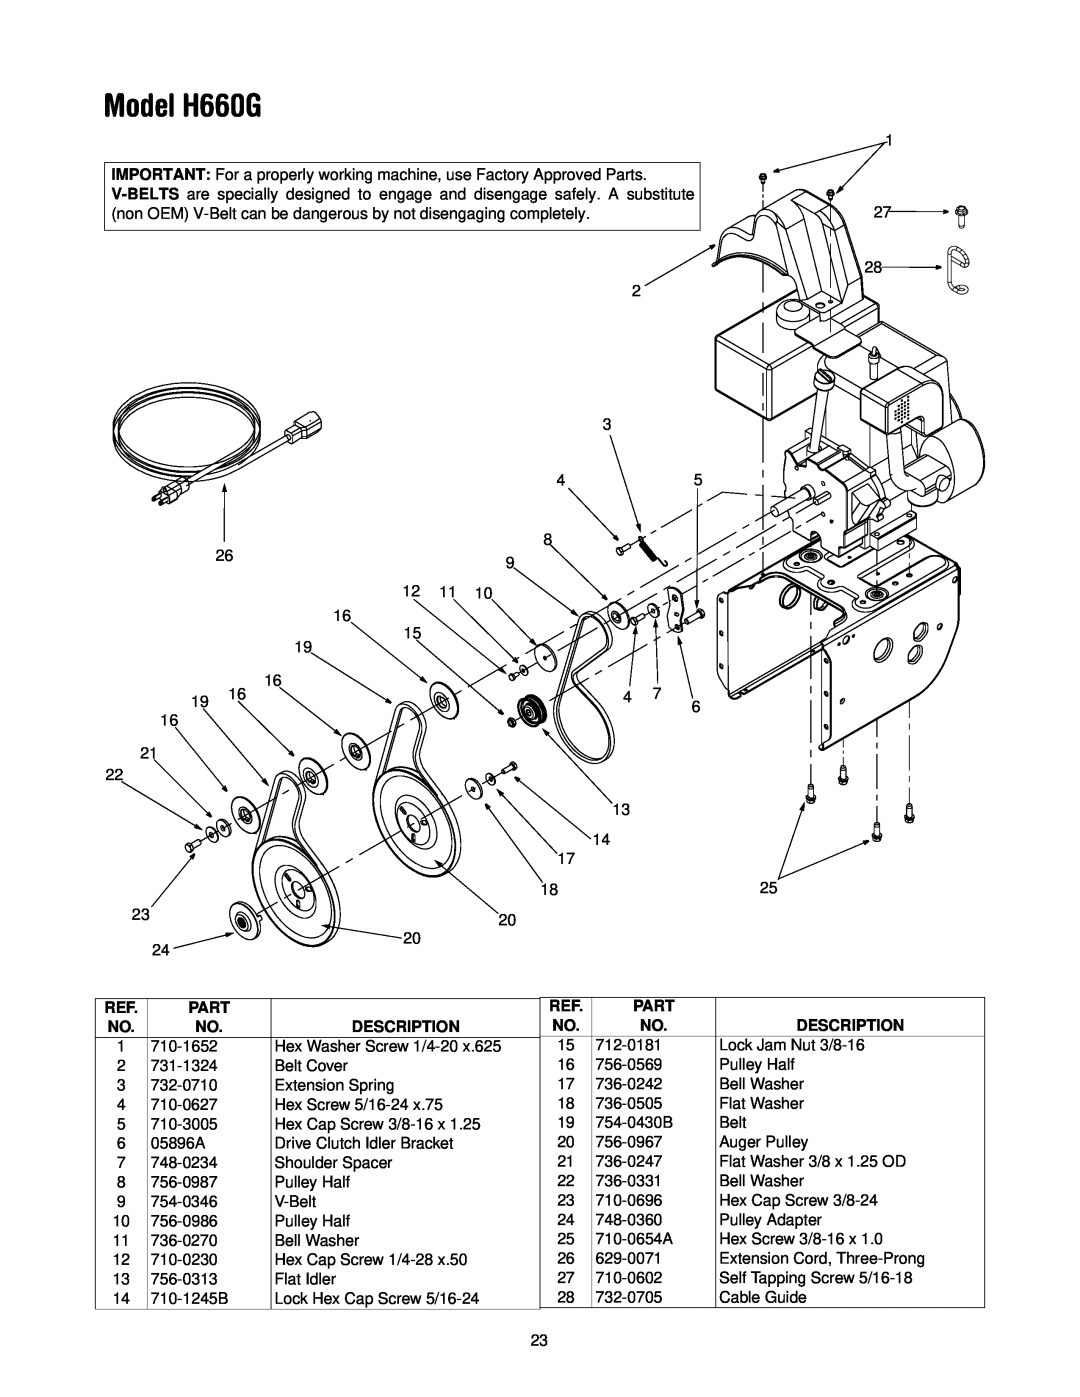 MTD manual Model H660G, Part, Description 